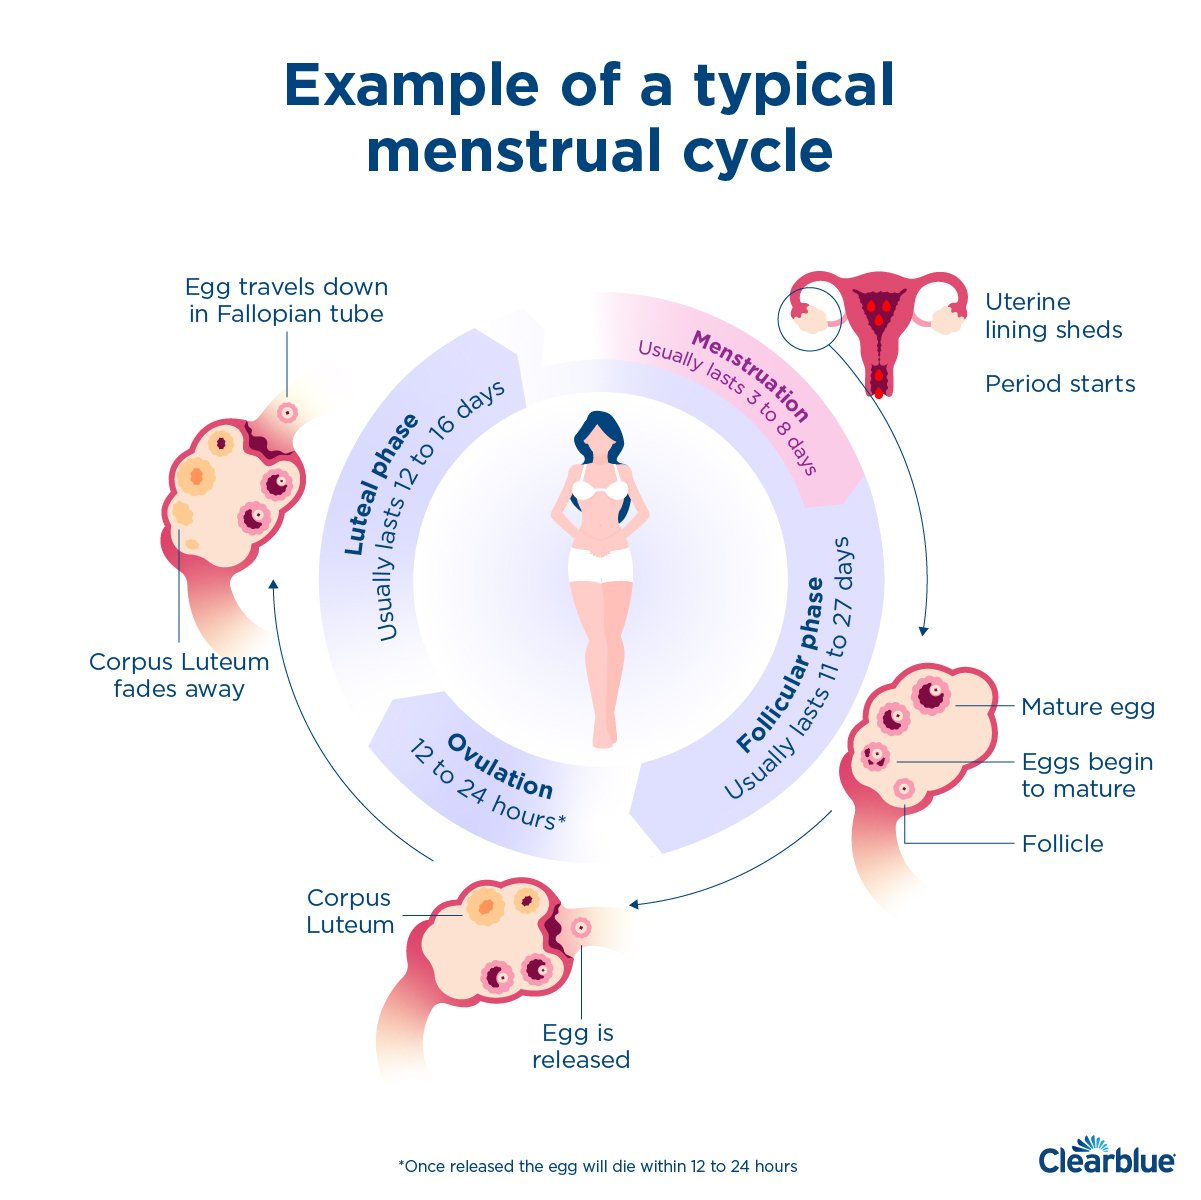 Menstrual health and pregnancy